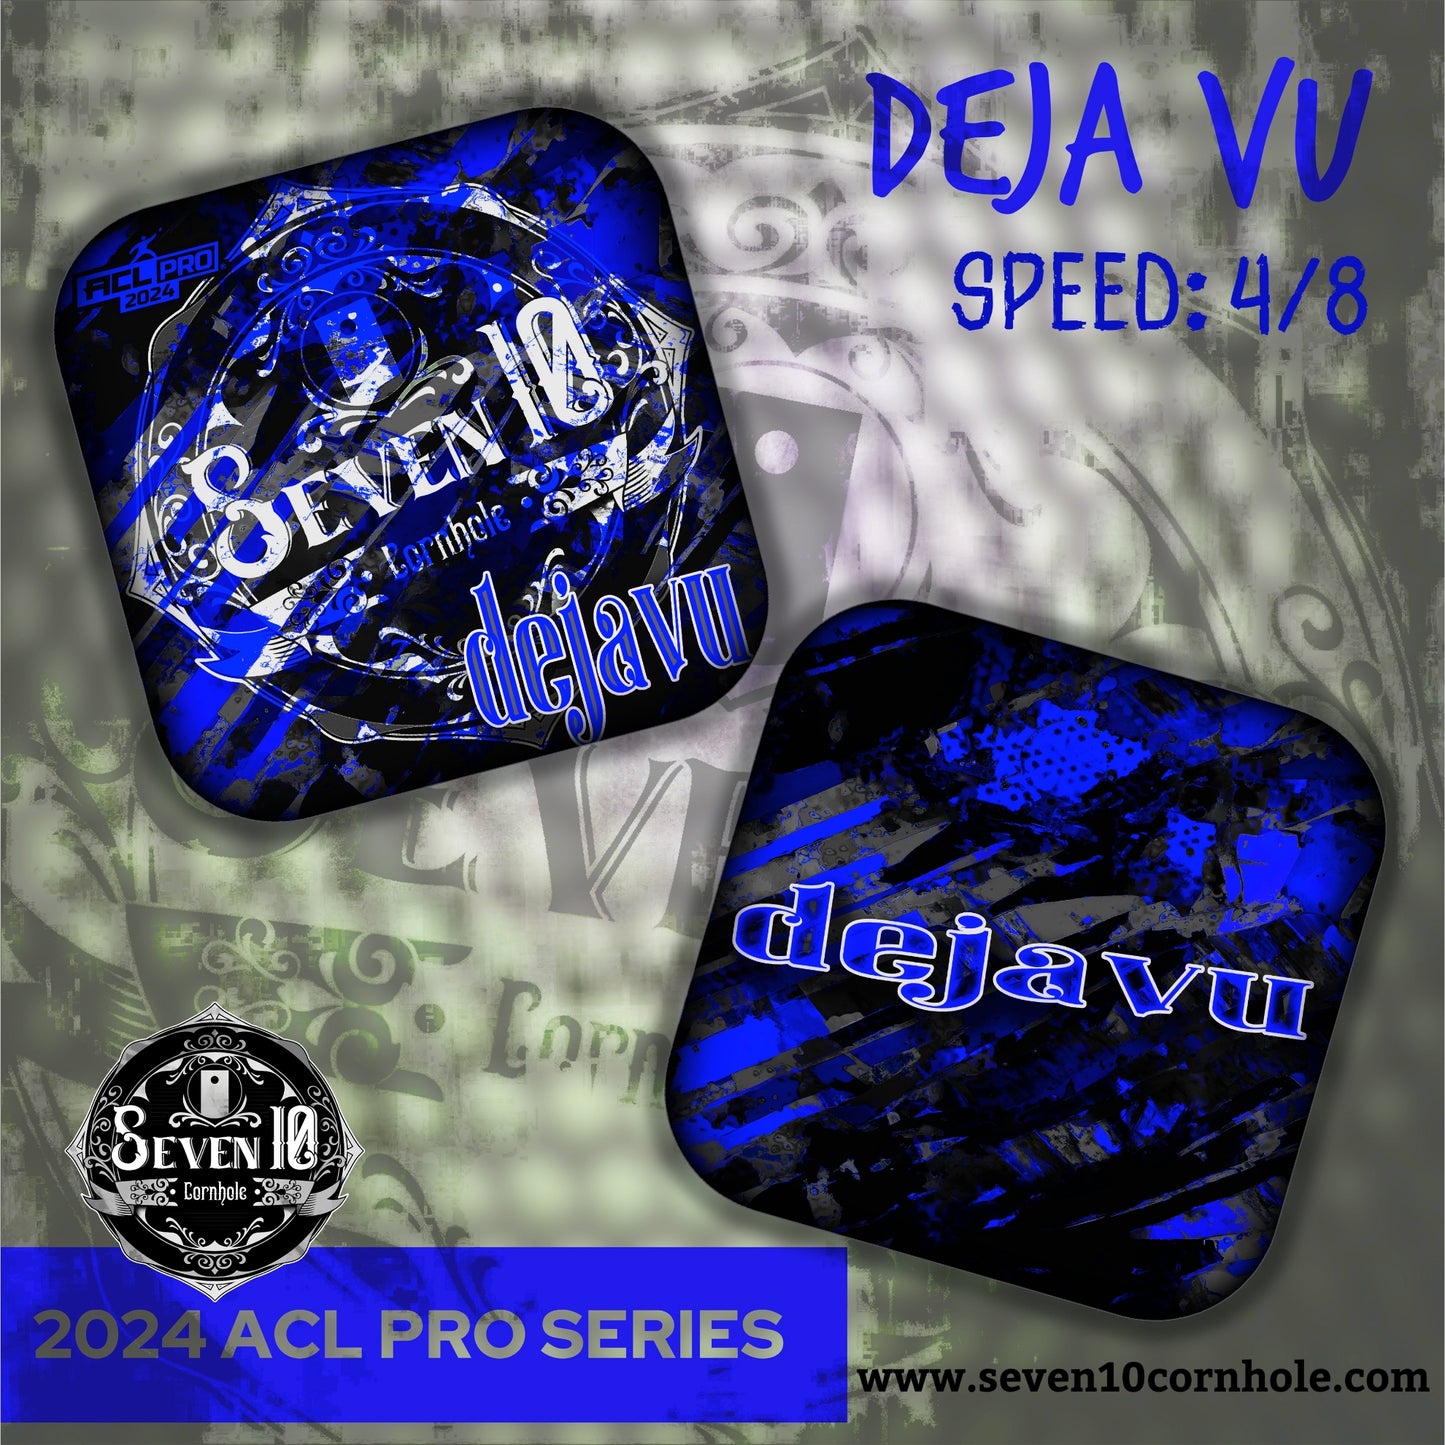 Seven 10 Cornhole Bags - Deja Vu - ACL 2024 Pro Series